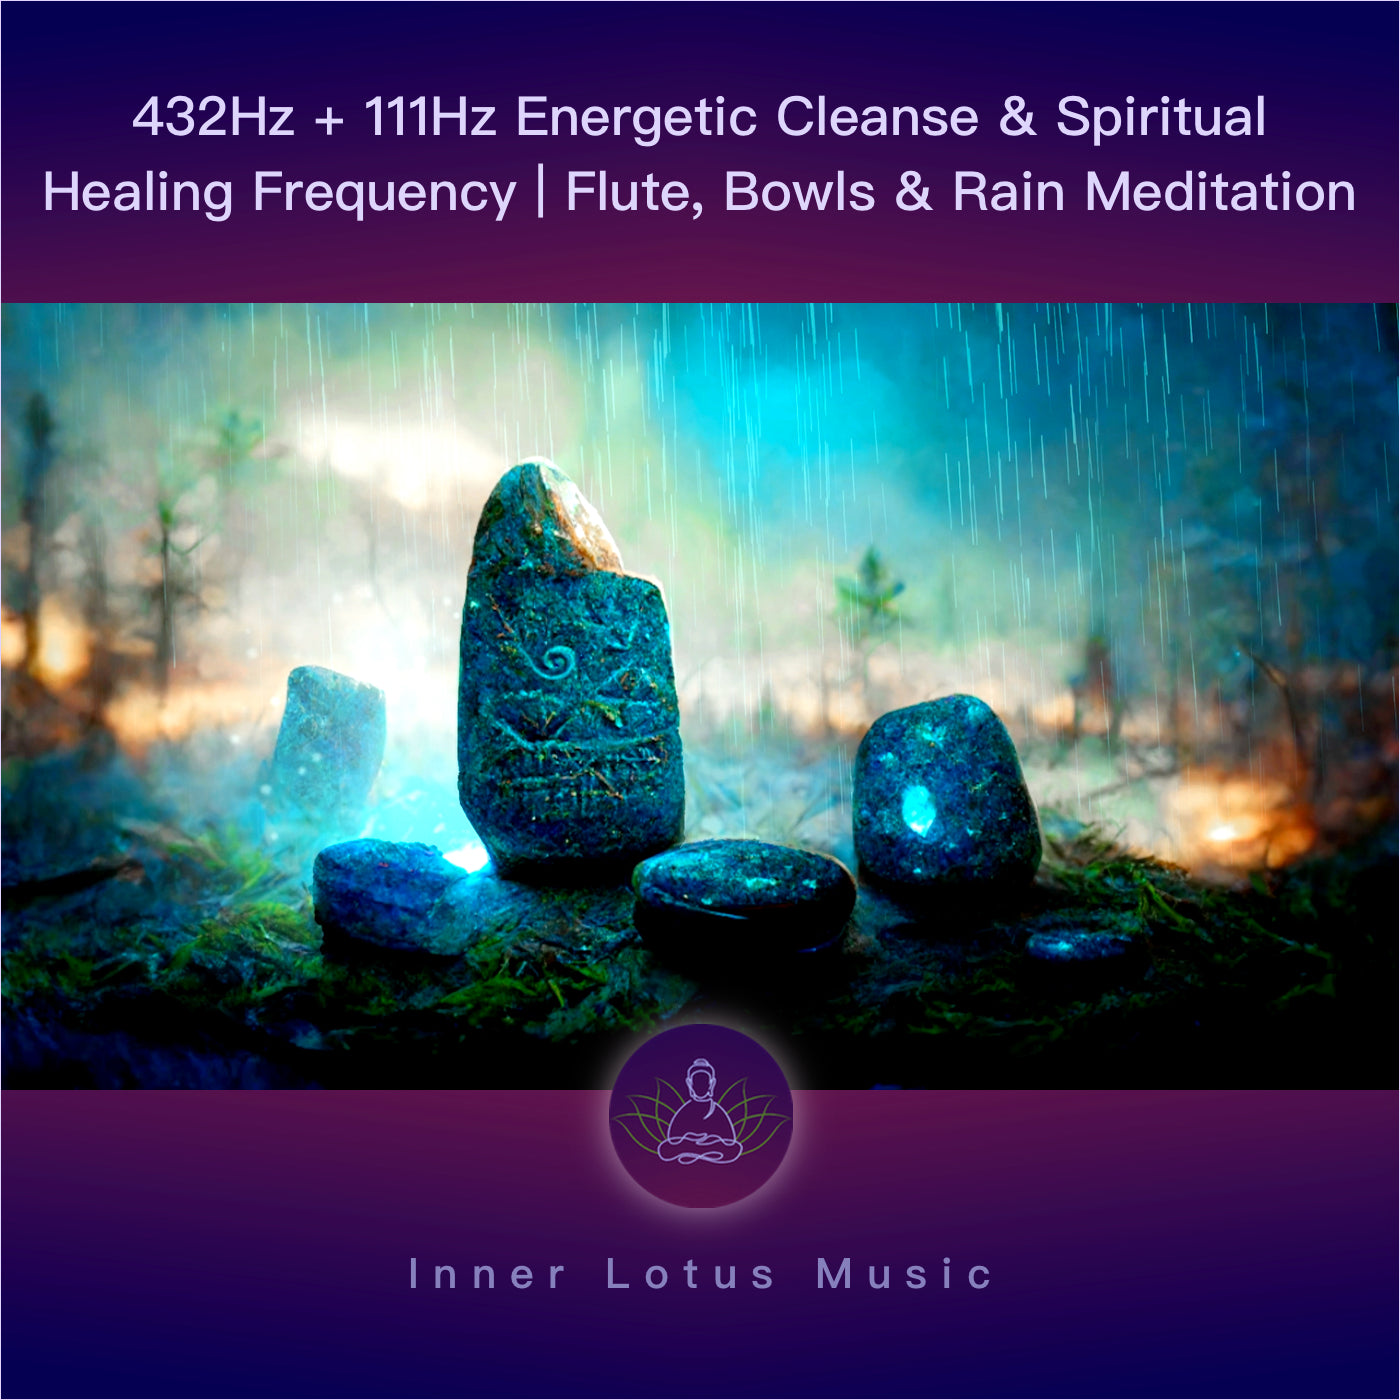 432Hz + 111Hz Energetic Cleanse & Spiritual Healing Frequency | Flute, Bowls & Rain Meditation Music